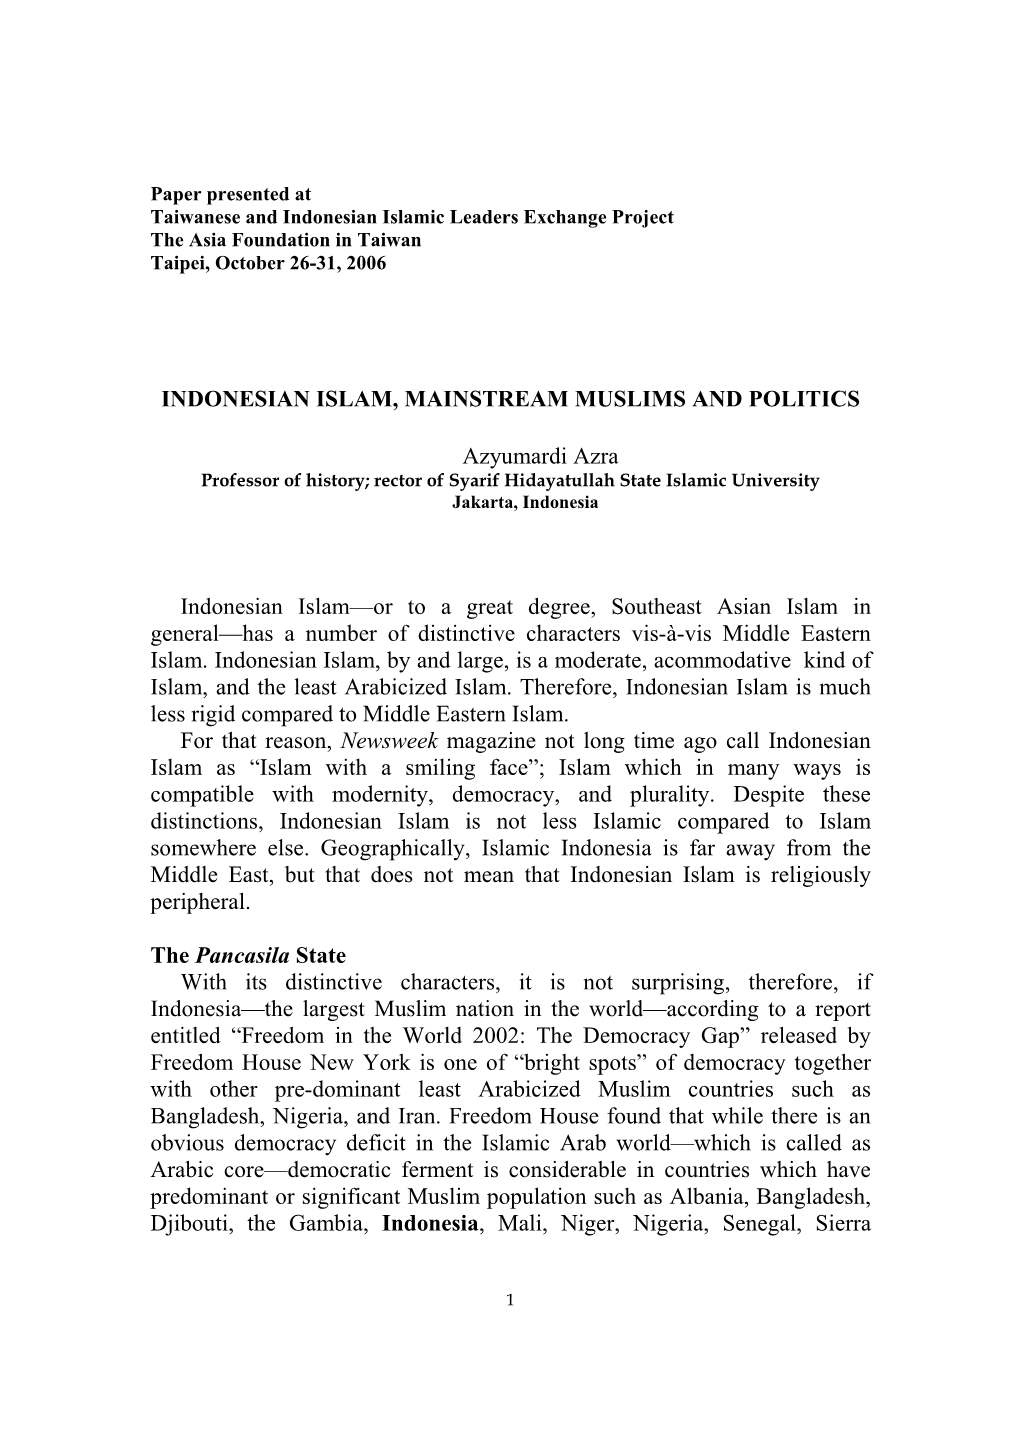 Indonesian Islam, Mainstream Muslims and Politics